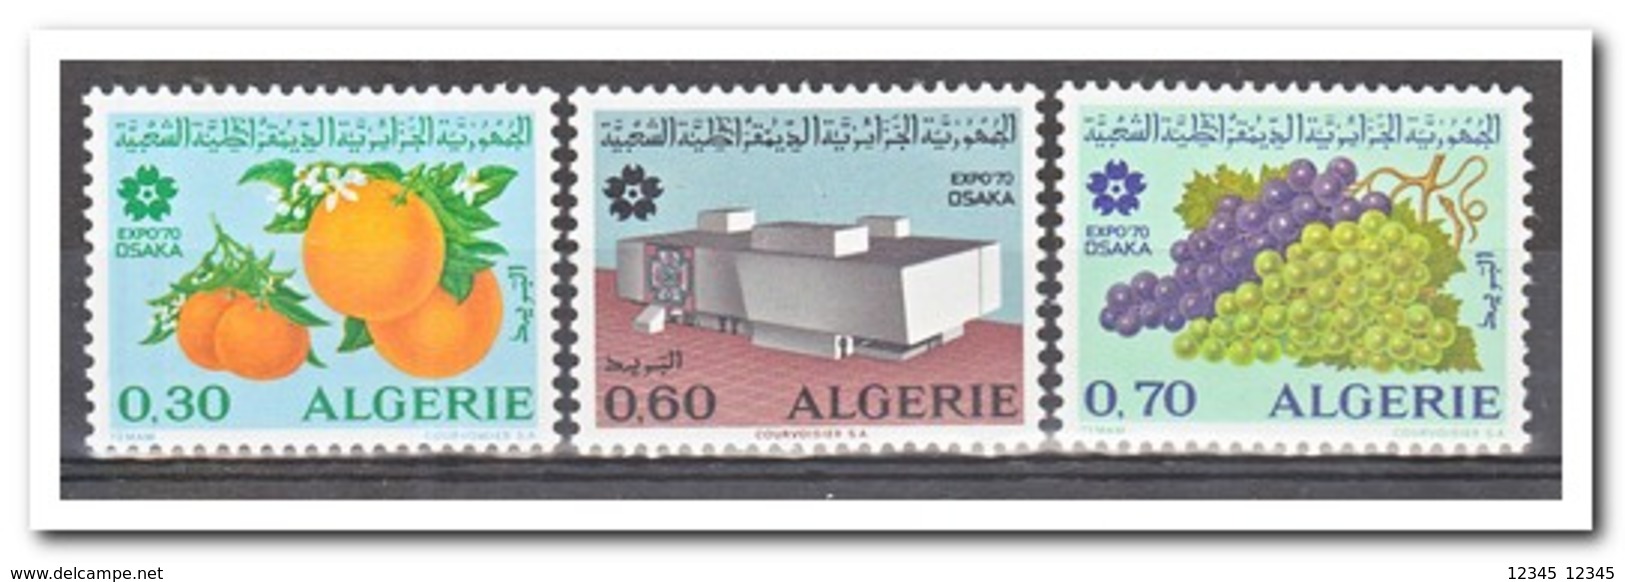 Algerije 1970, Postfris MNH, Fruit - Algerije (1962-...)